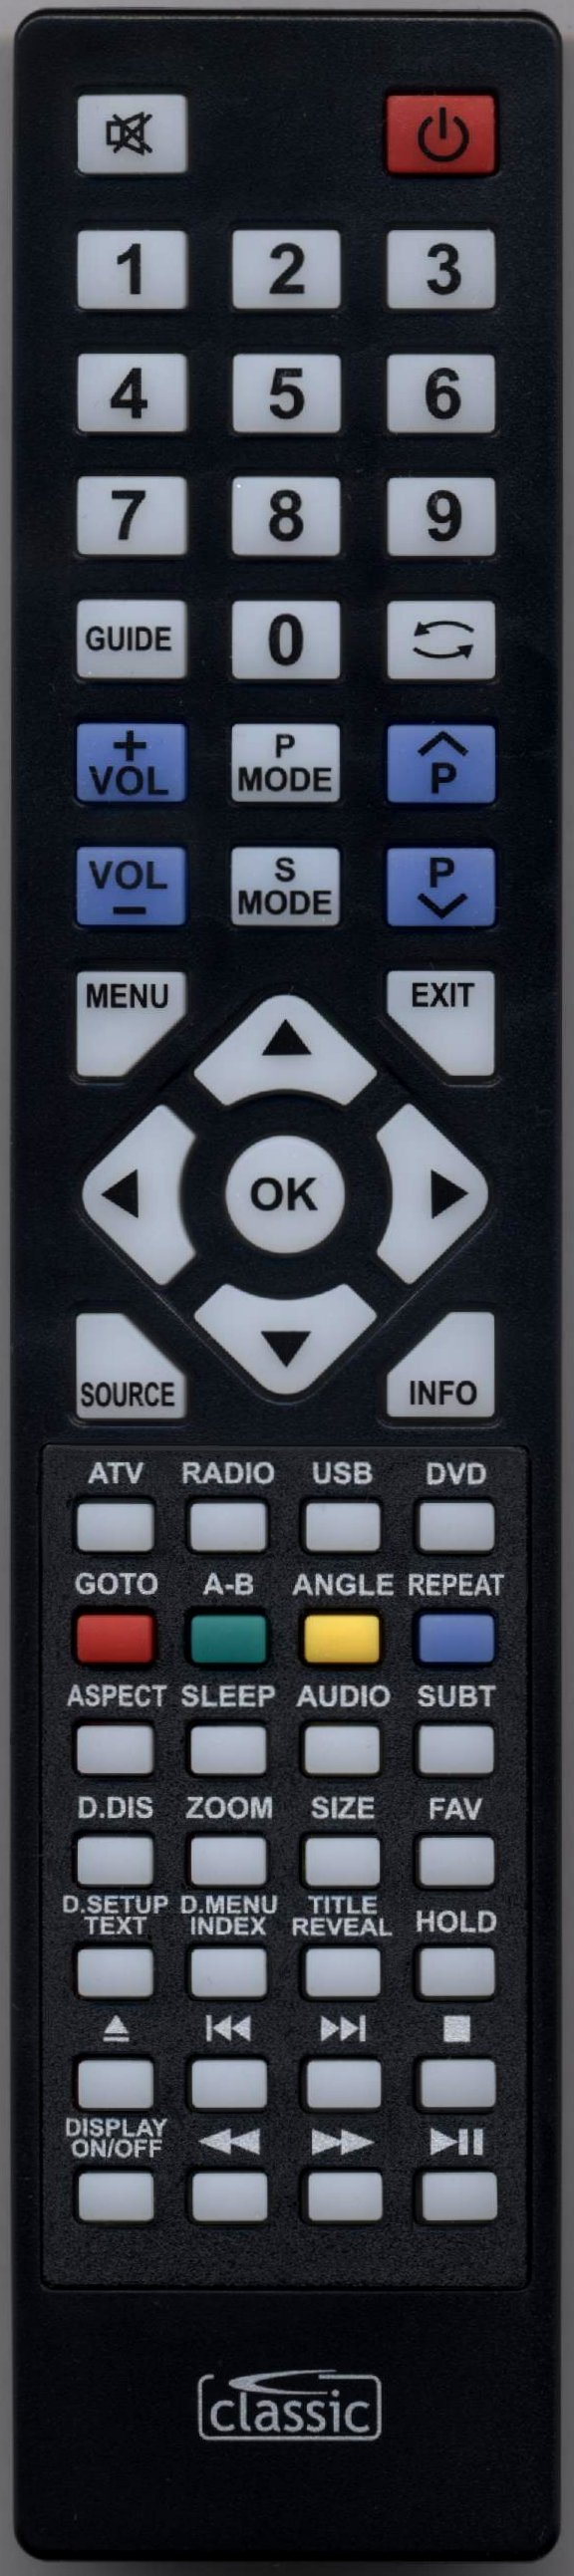 UMC - X216/28G Alternative Remote Control